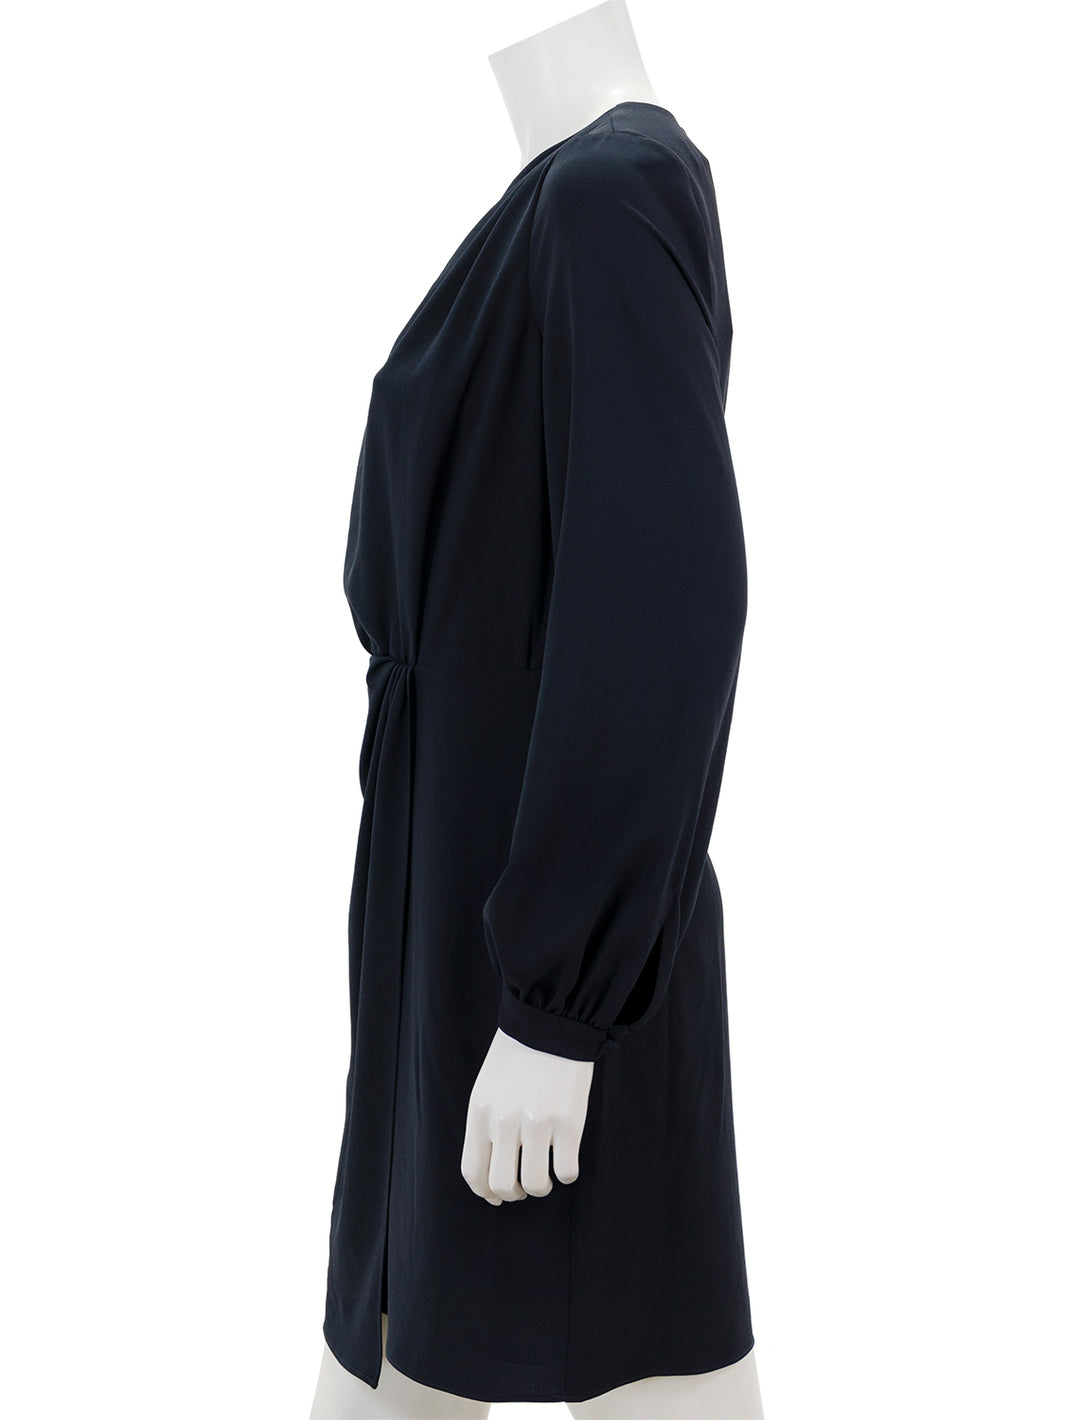 Side view of Veronica Beard's patrizia dress in dark navy.